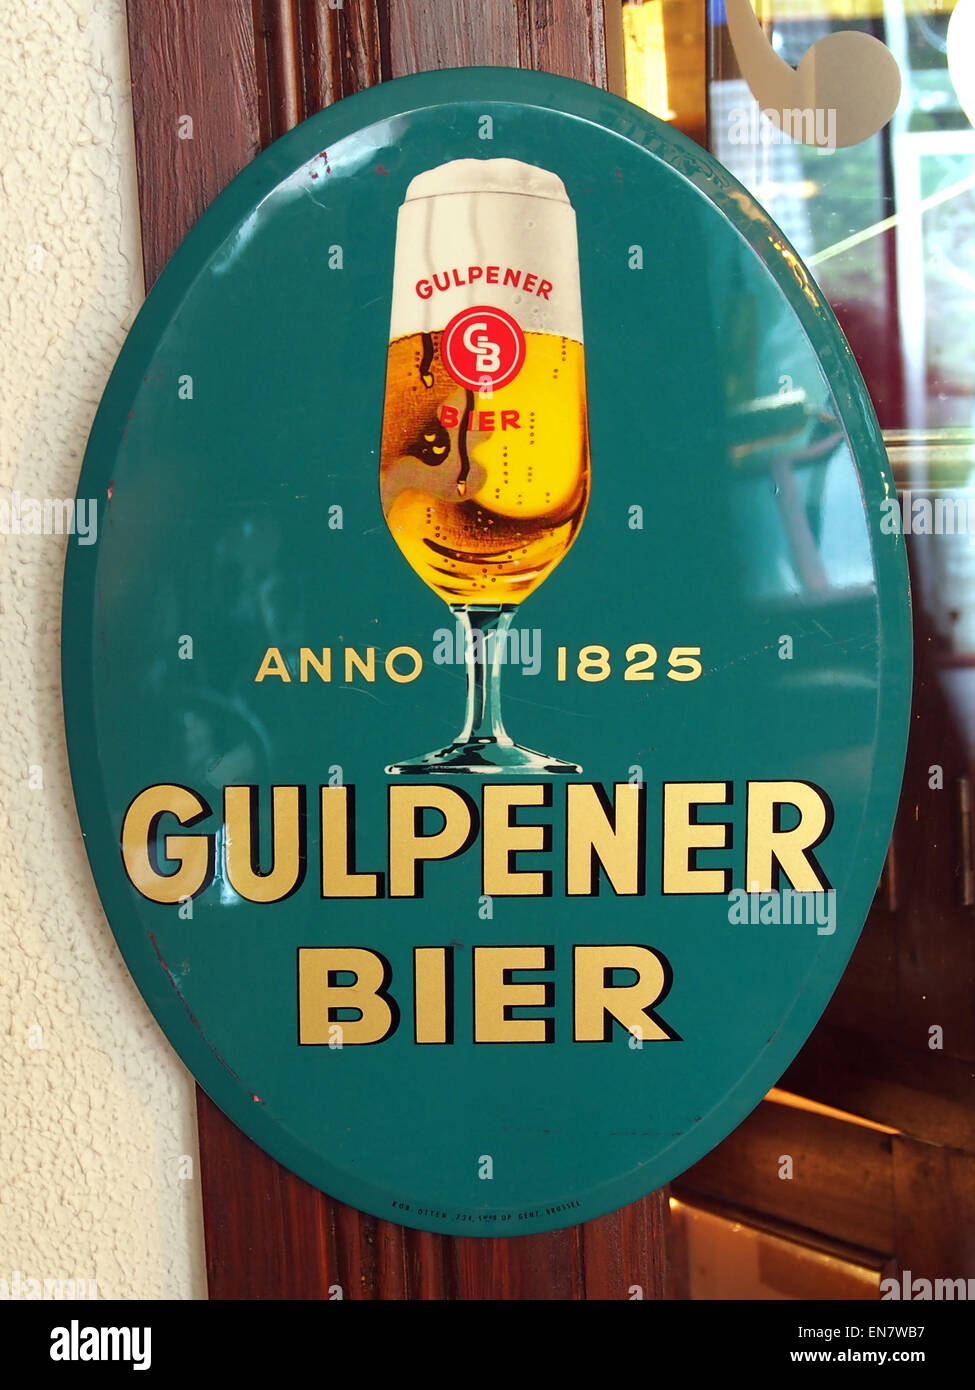 Gulpener Bier, Metall-Werbeschild Stockfotografie - Alamy